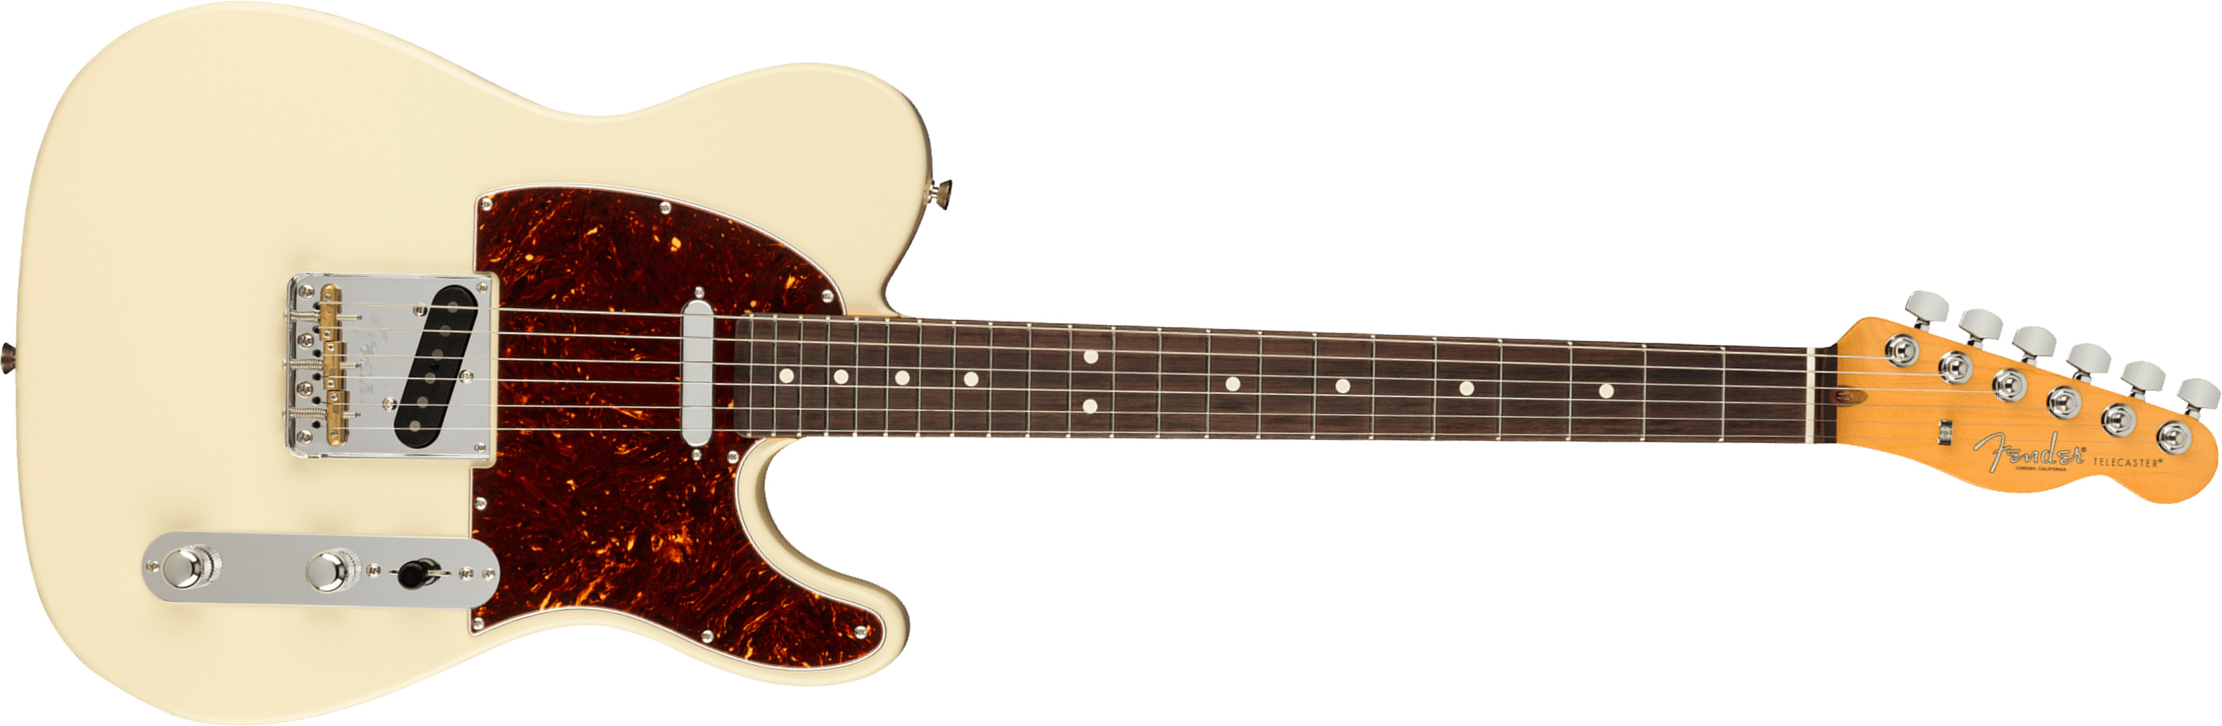 Fender Tele American Professional Ii Usa Rw - Olympic White - E-Gitarre in Teleform - Main picture